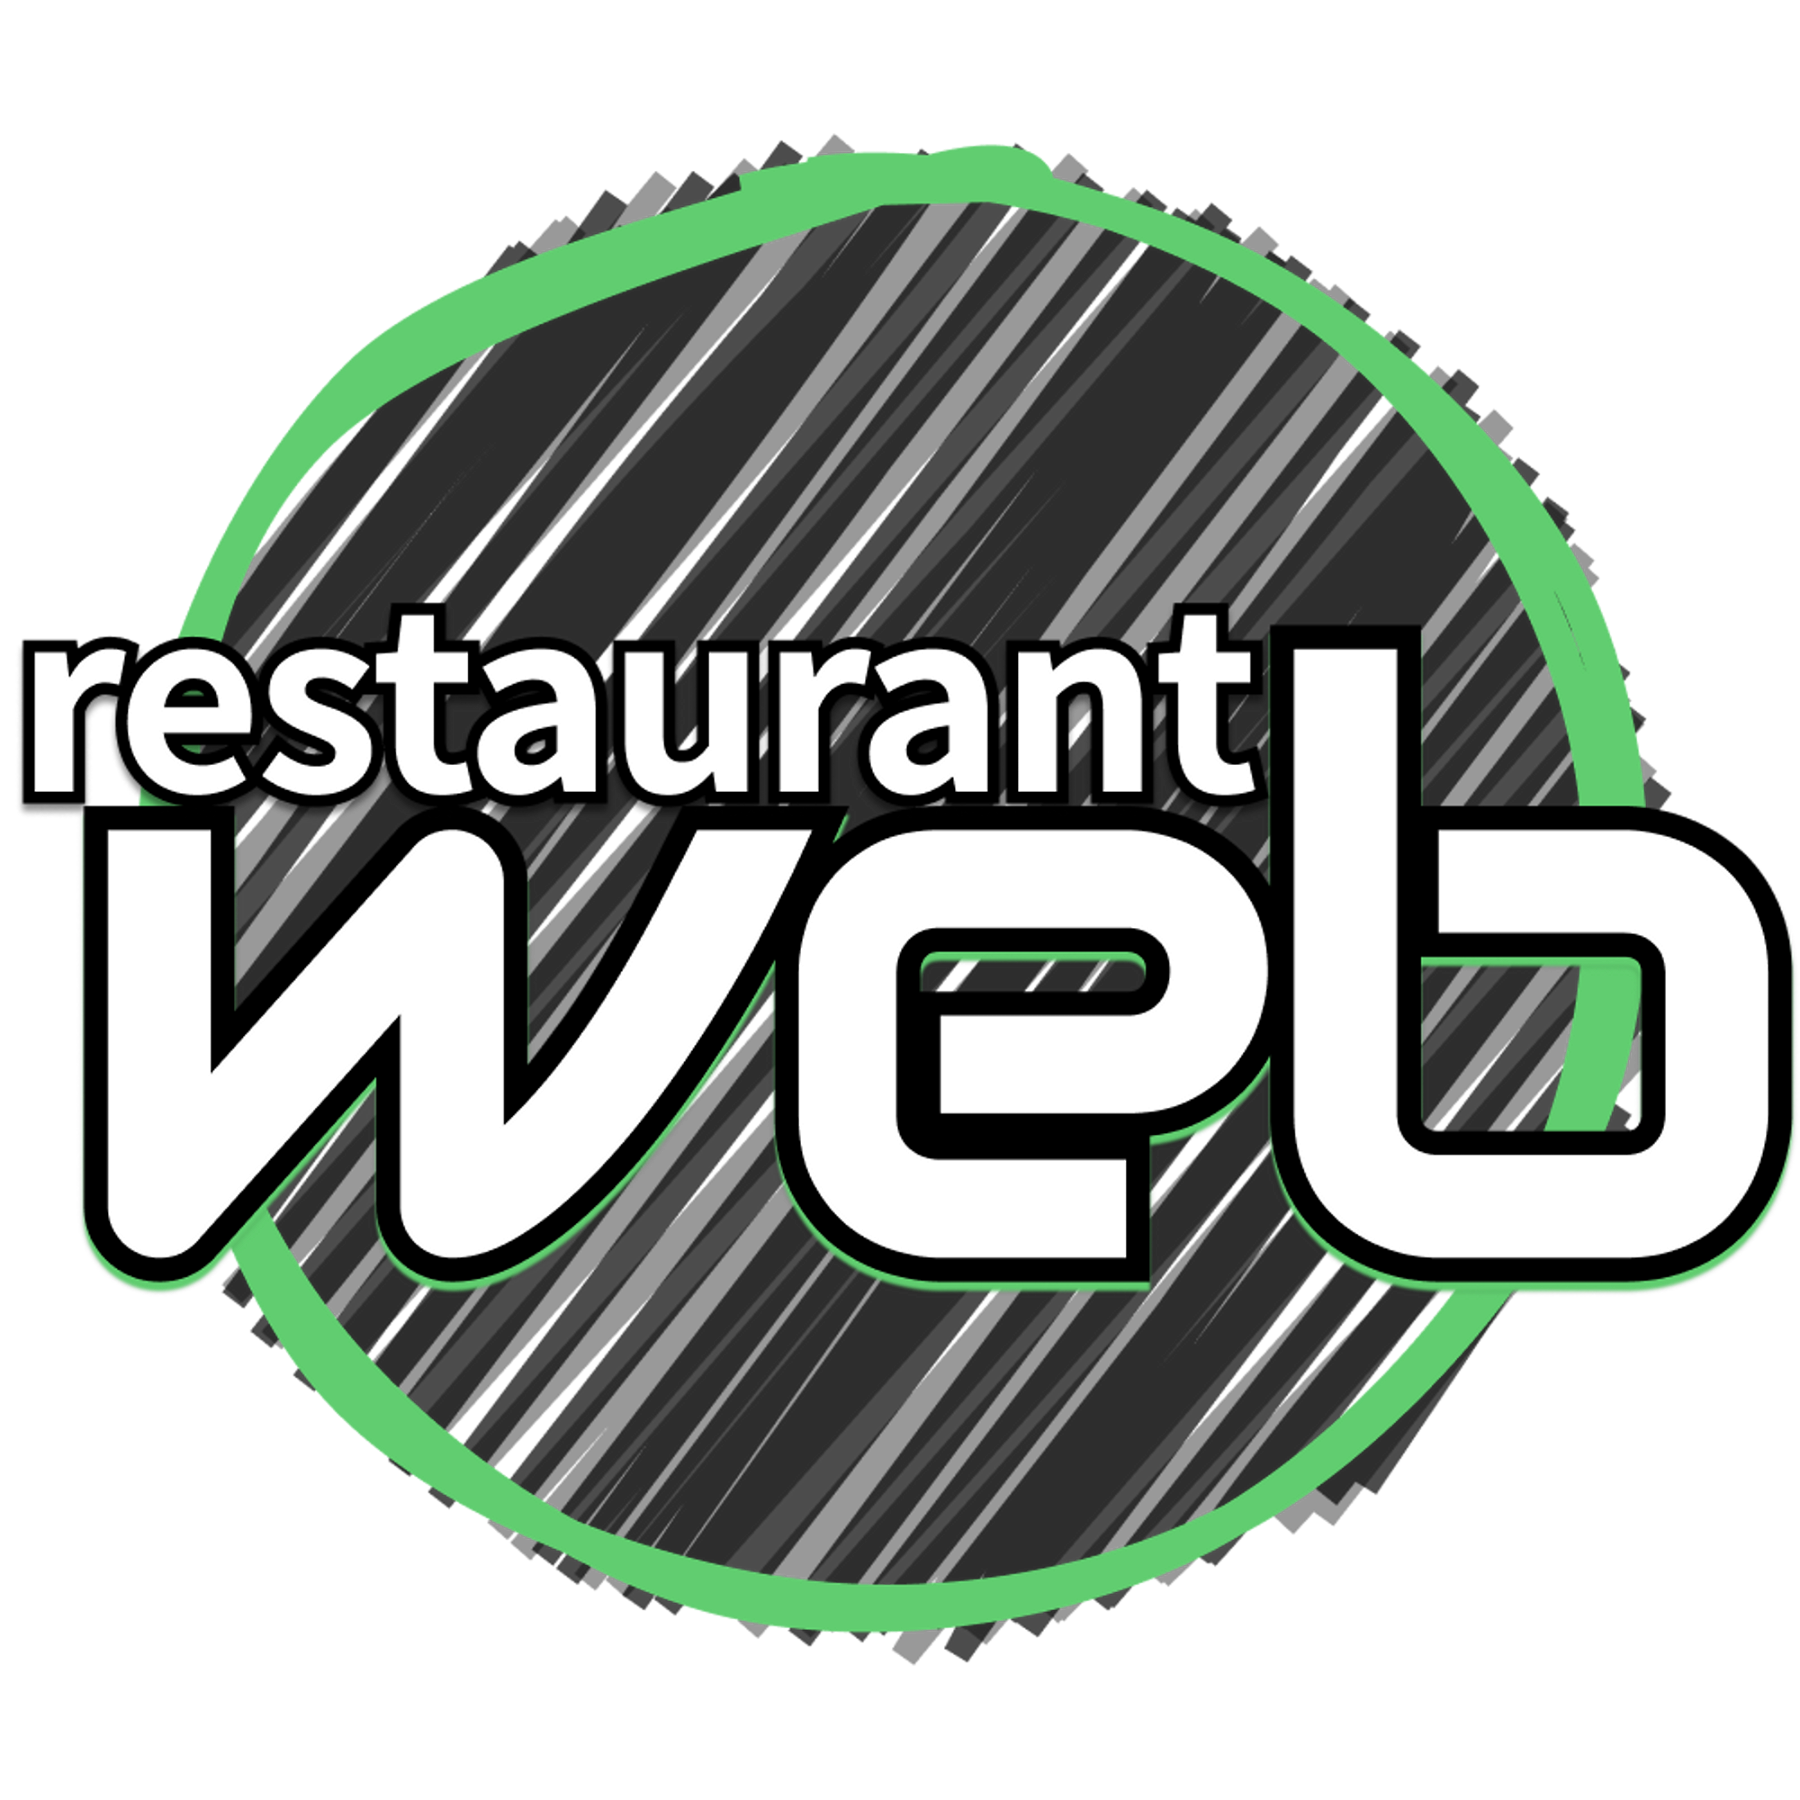 https://theindustrydirect.com/spheres/restaurant-web